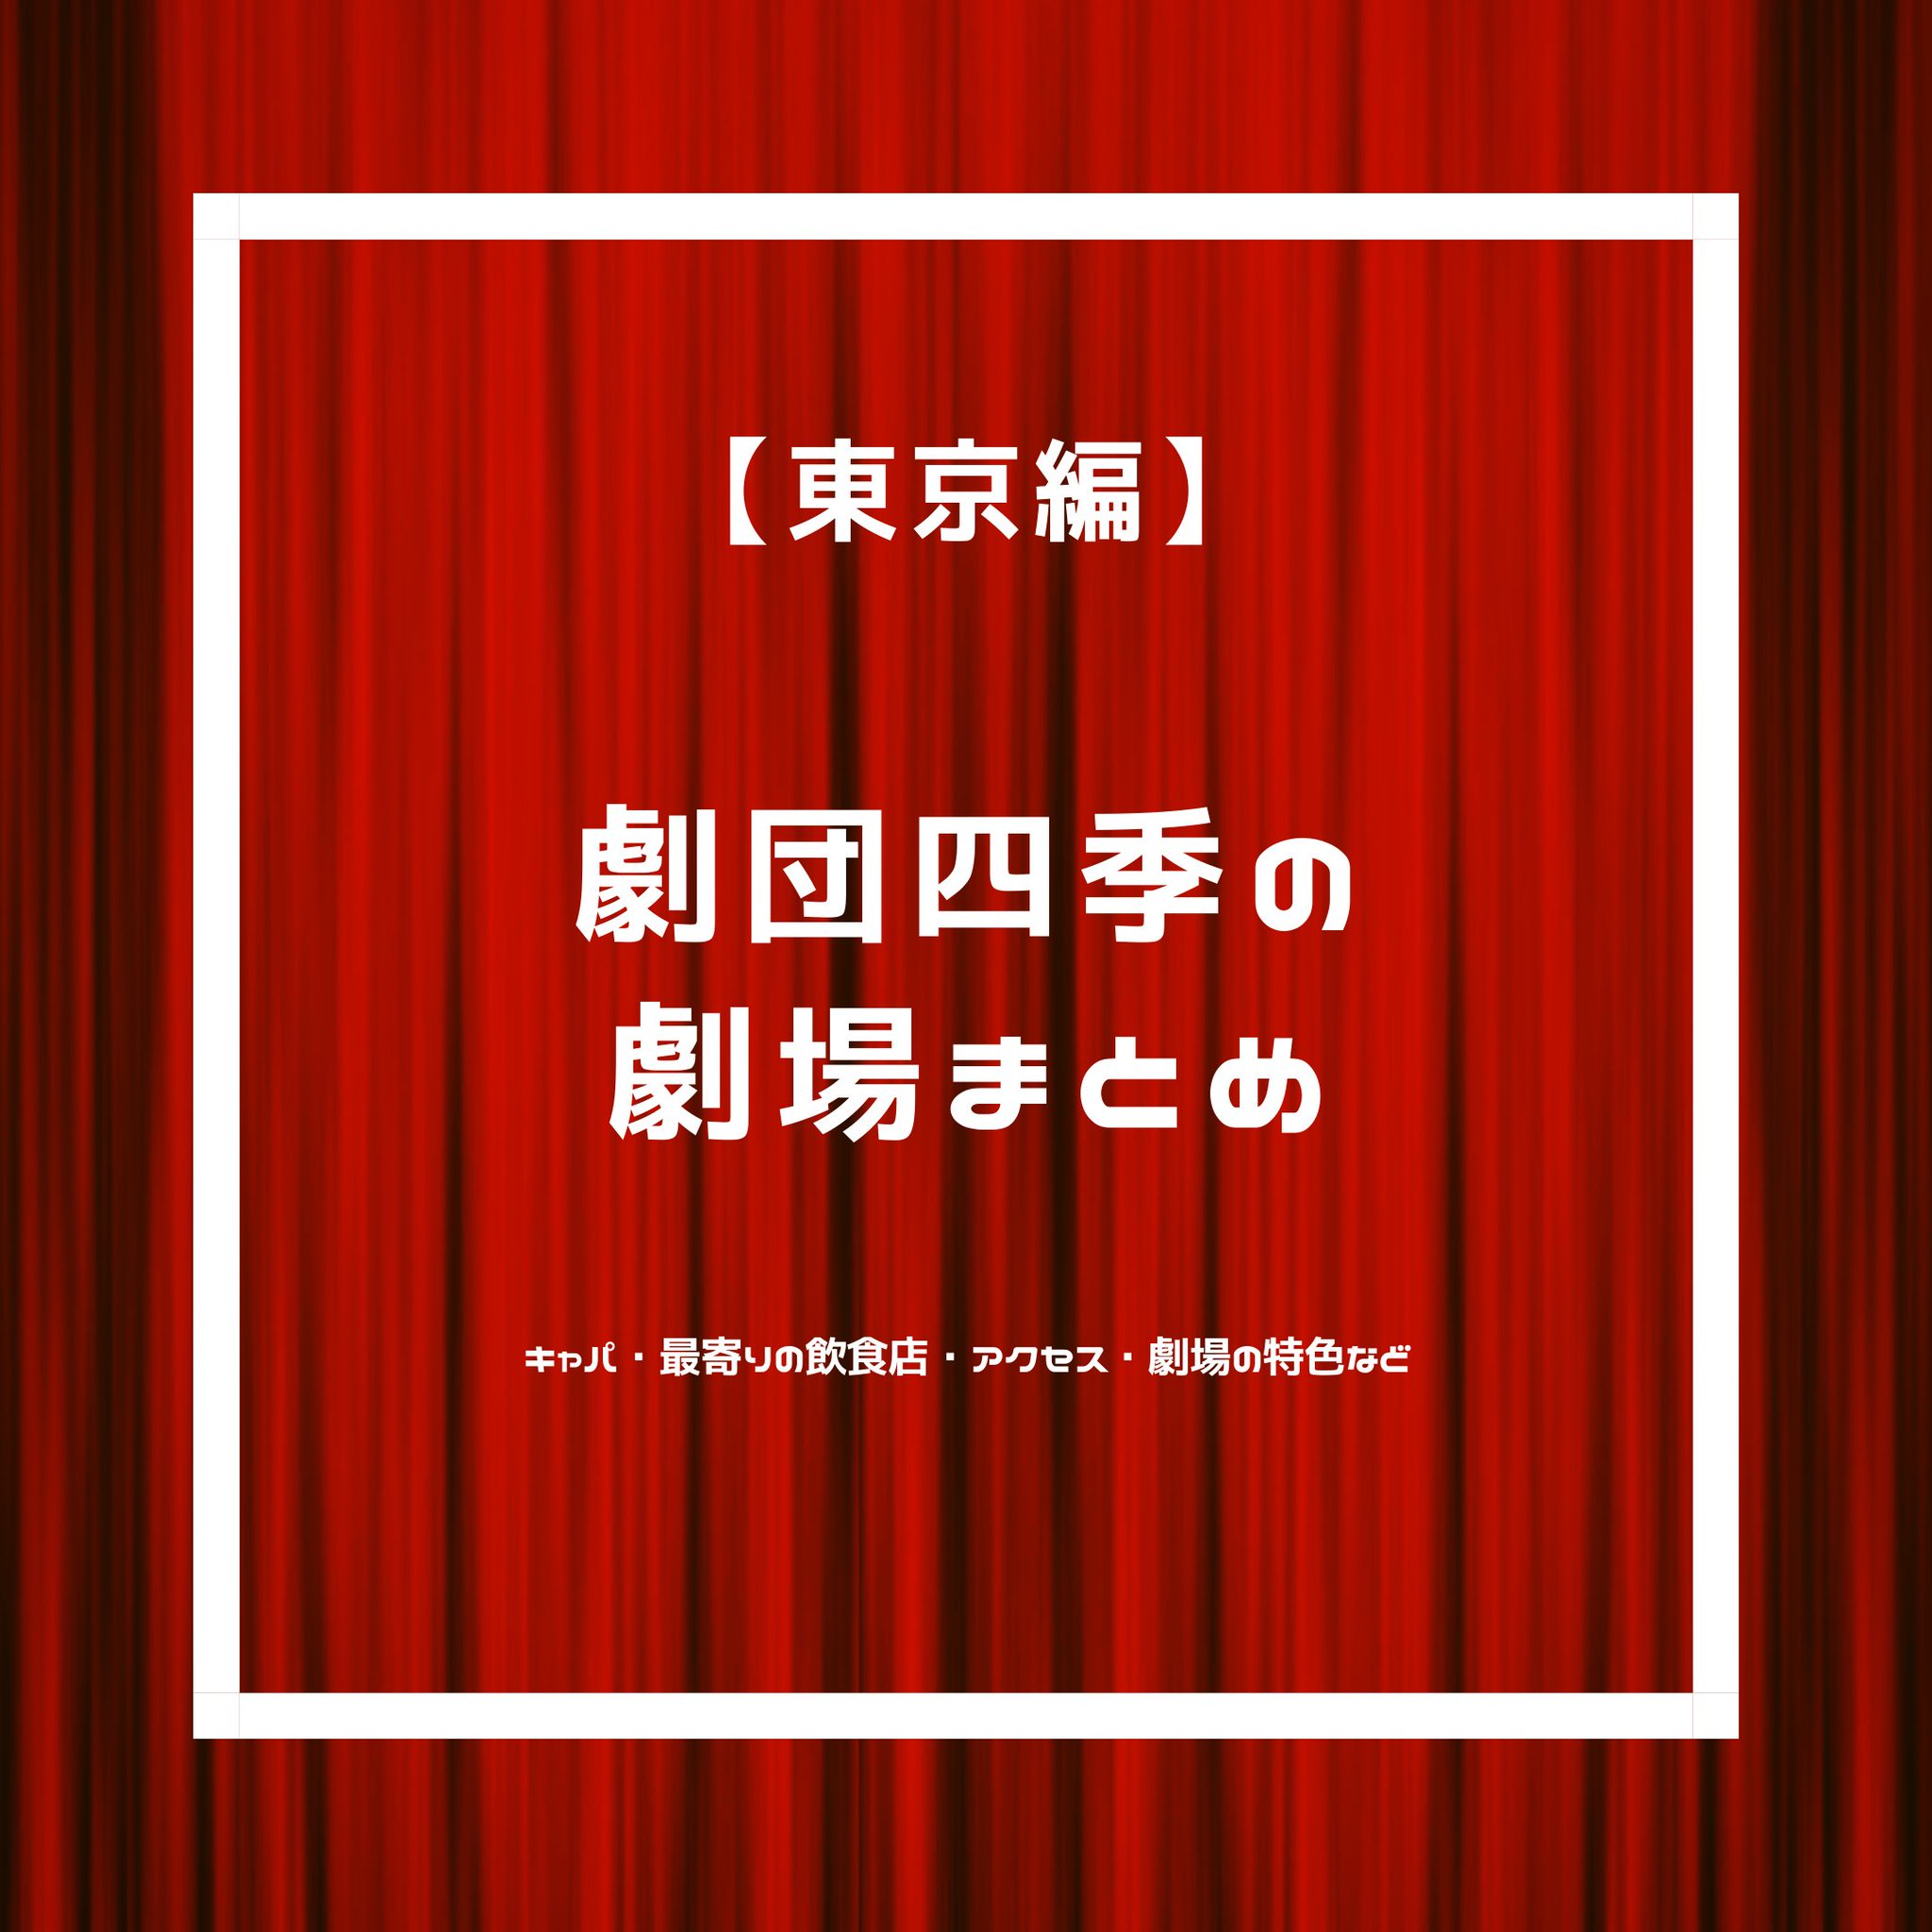 Art 劇団四季の劇場まとめ 東京編 キャパ 収容人数 最寄りの飲食店 アクセス 各劇場の特色など アートコンサルタント ディズニーとミュージカルのニュースサイト T Co Kjo3l8ei3i